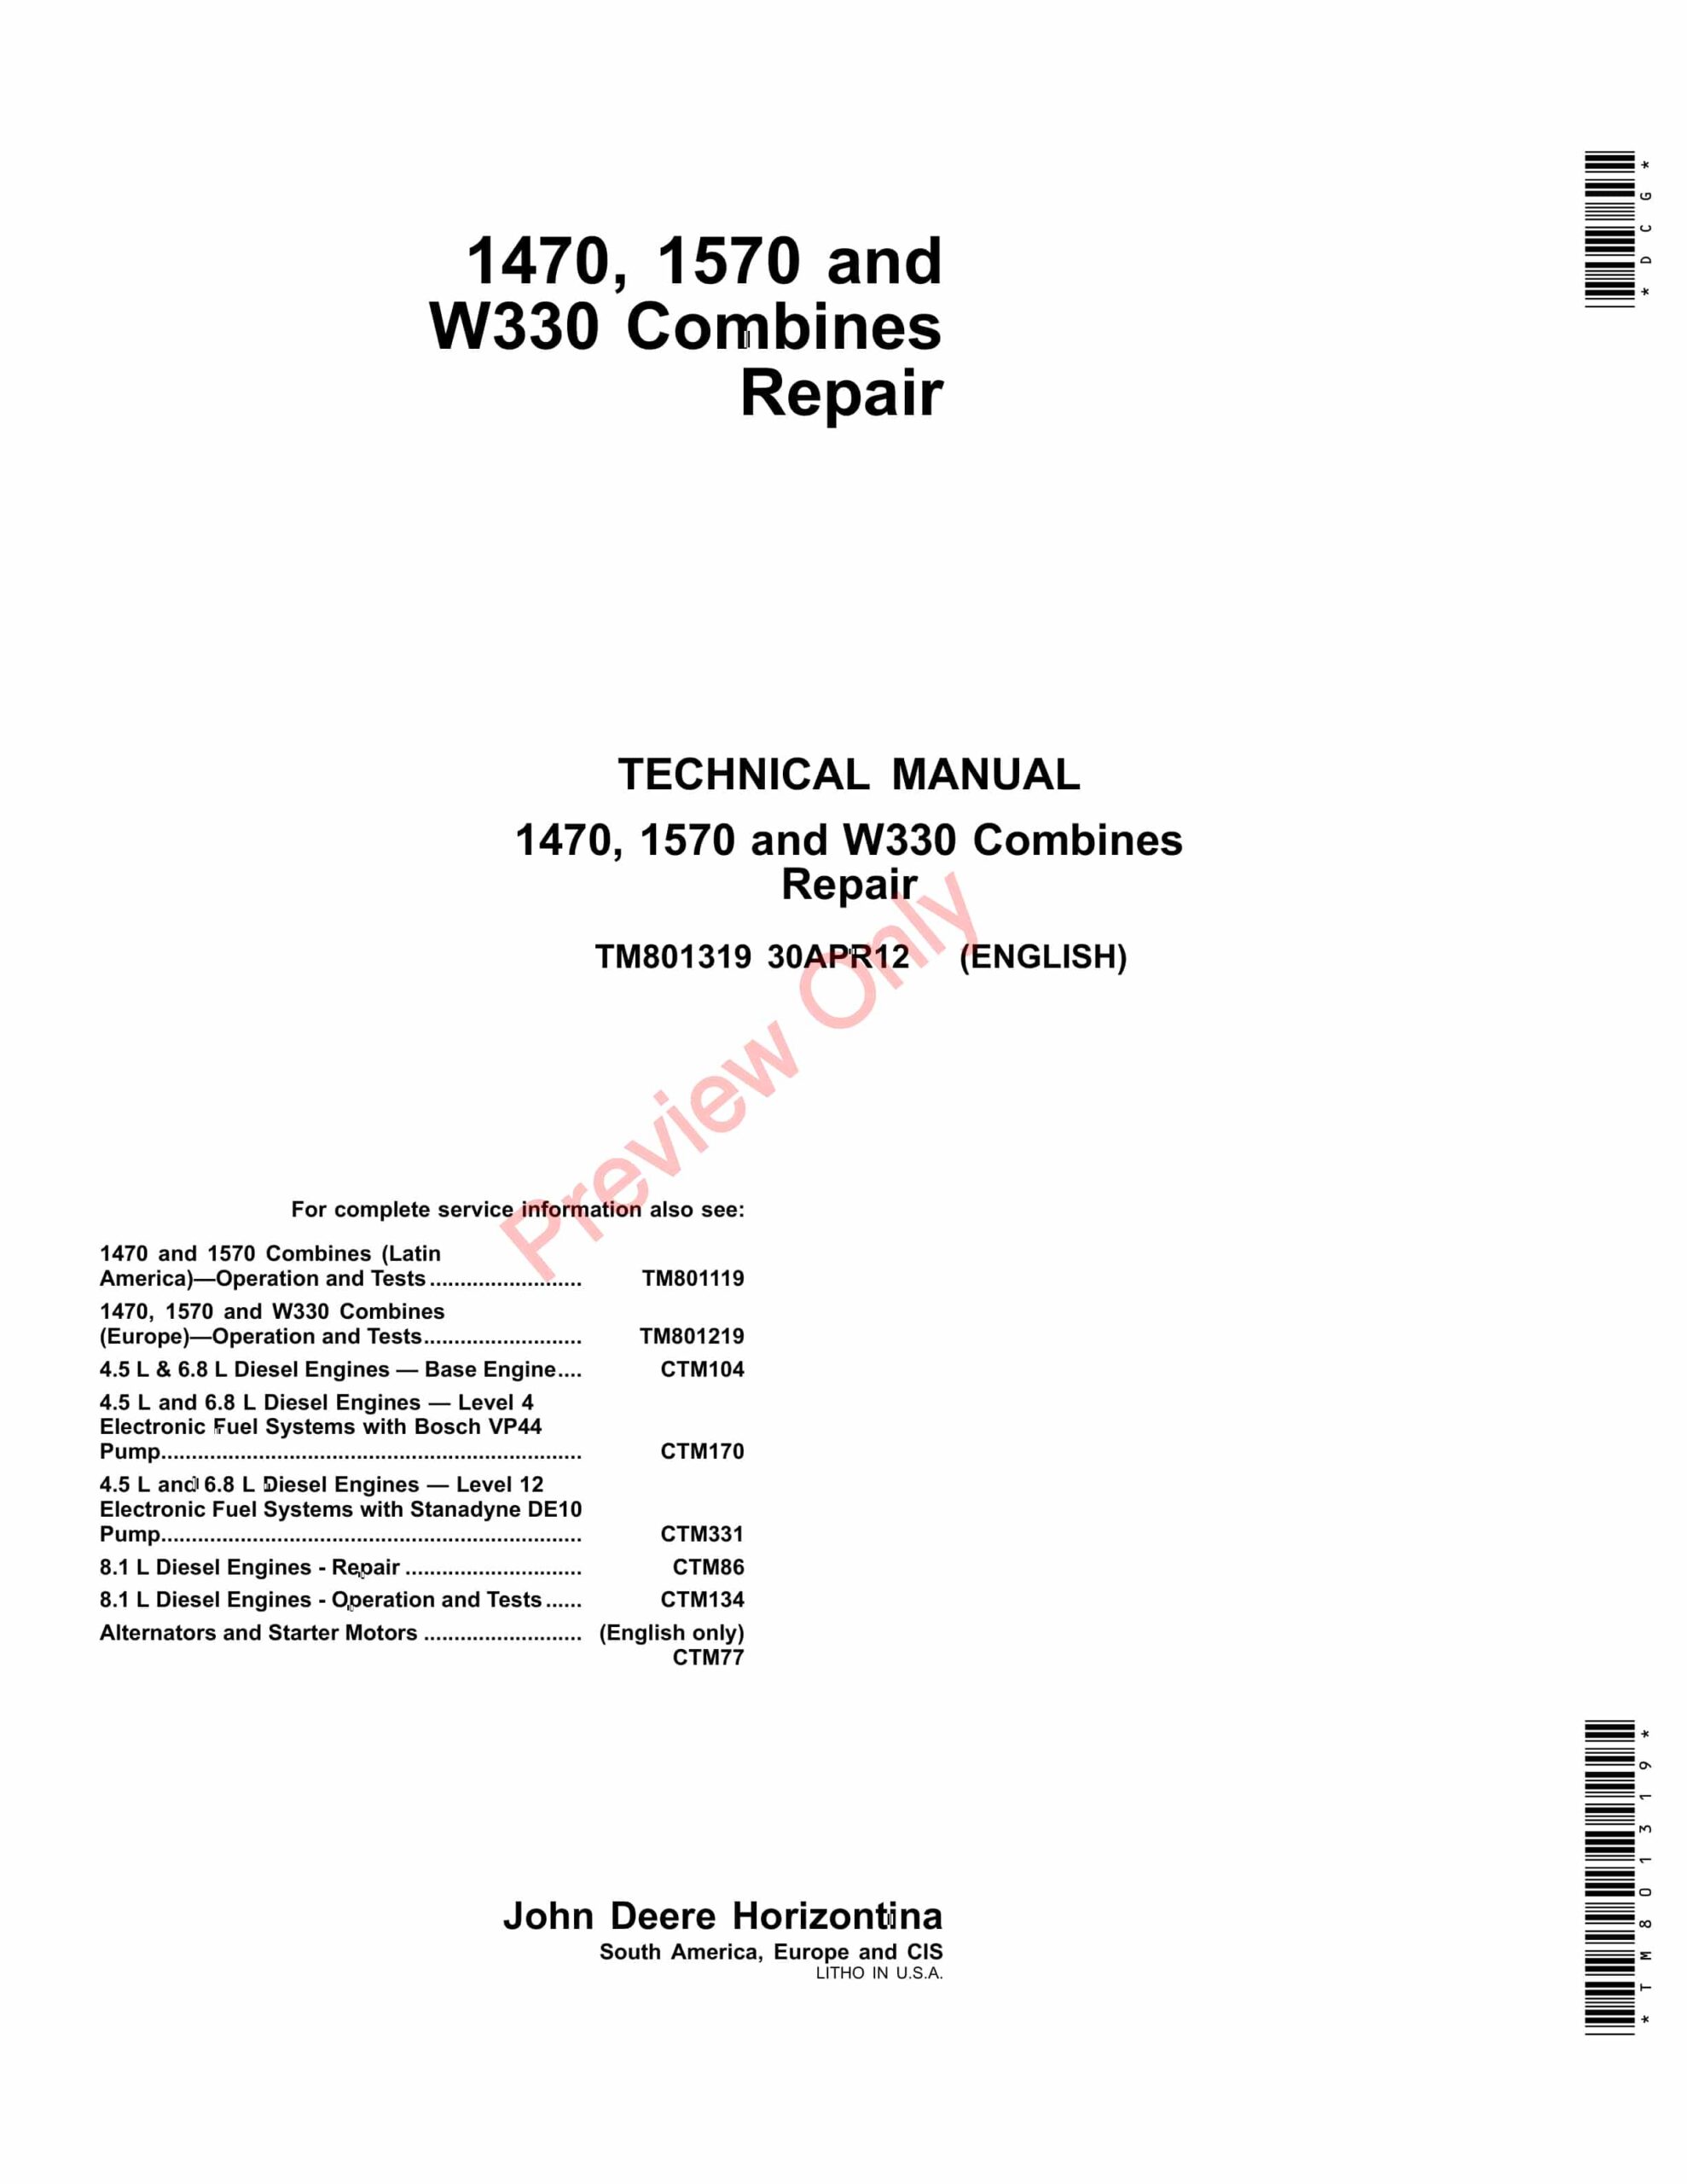 John Deere 1470, 1570 and W330 Combine Technical Manual TM801319 19SEP12-1